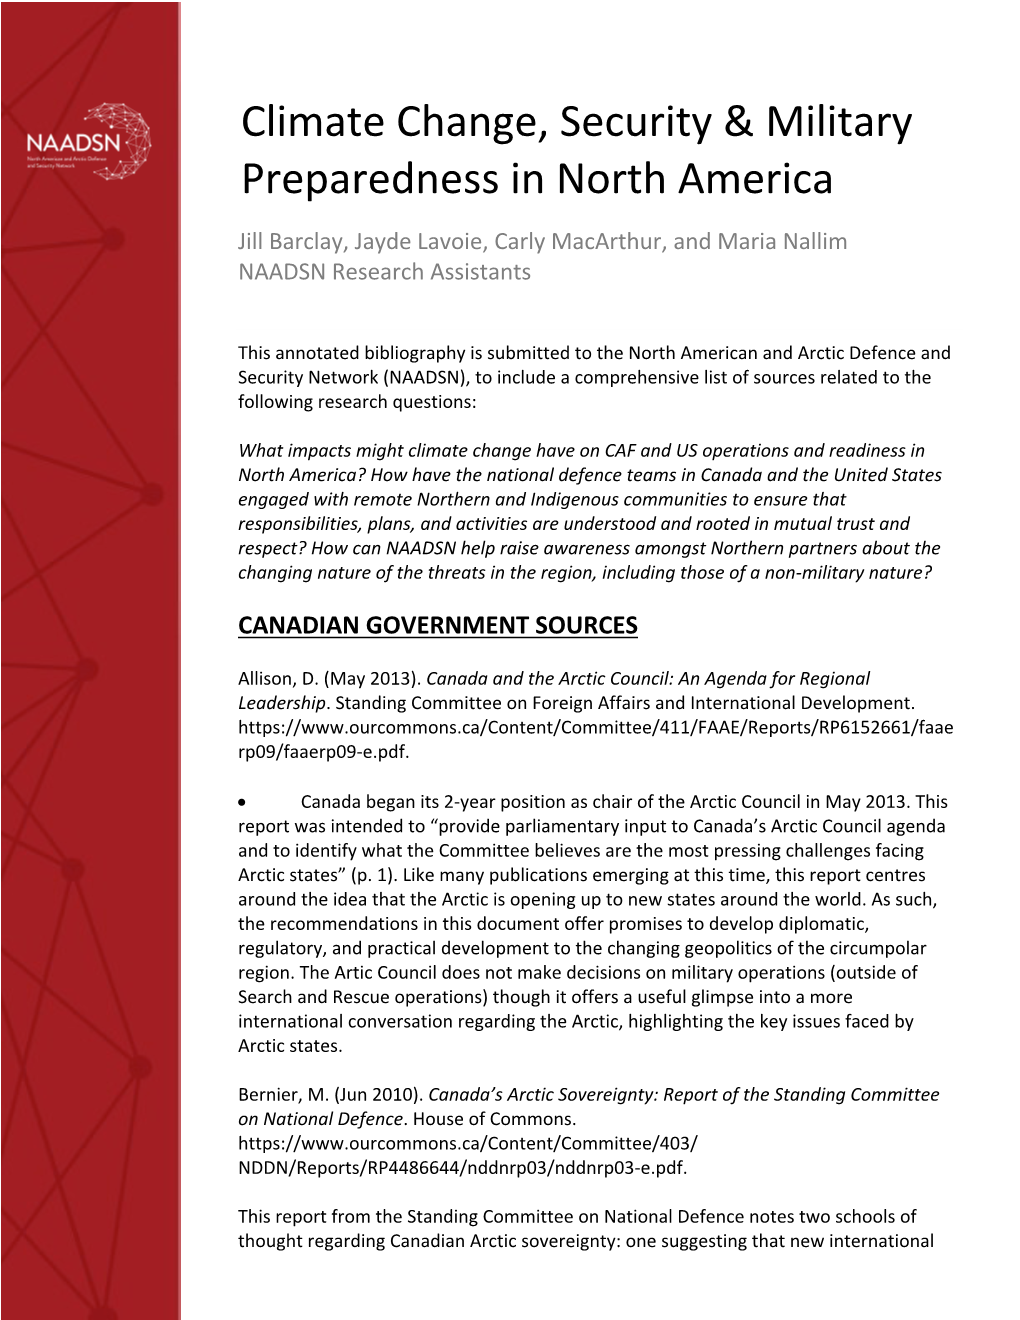 Climate Change, Security & Military Preparedness in North America